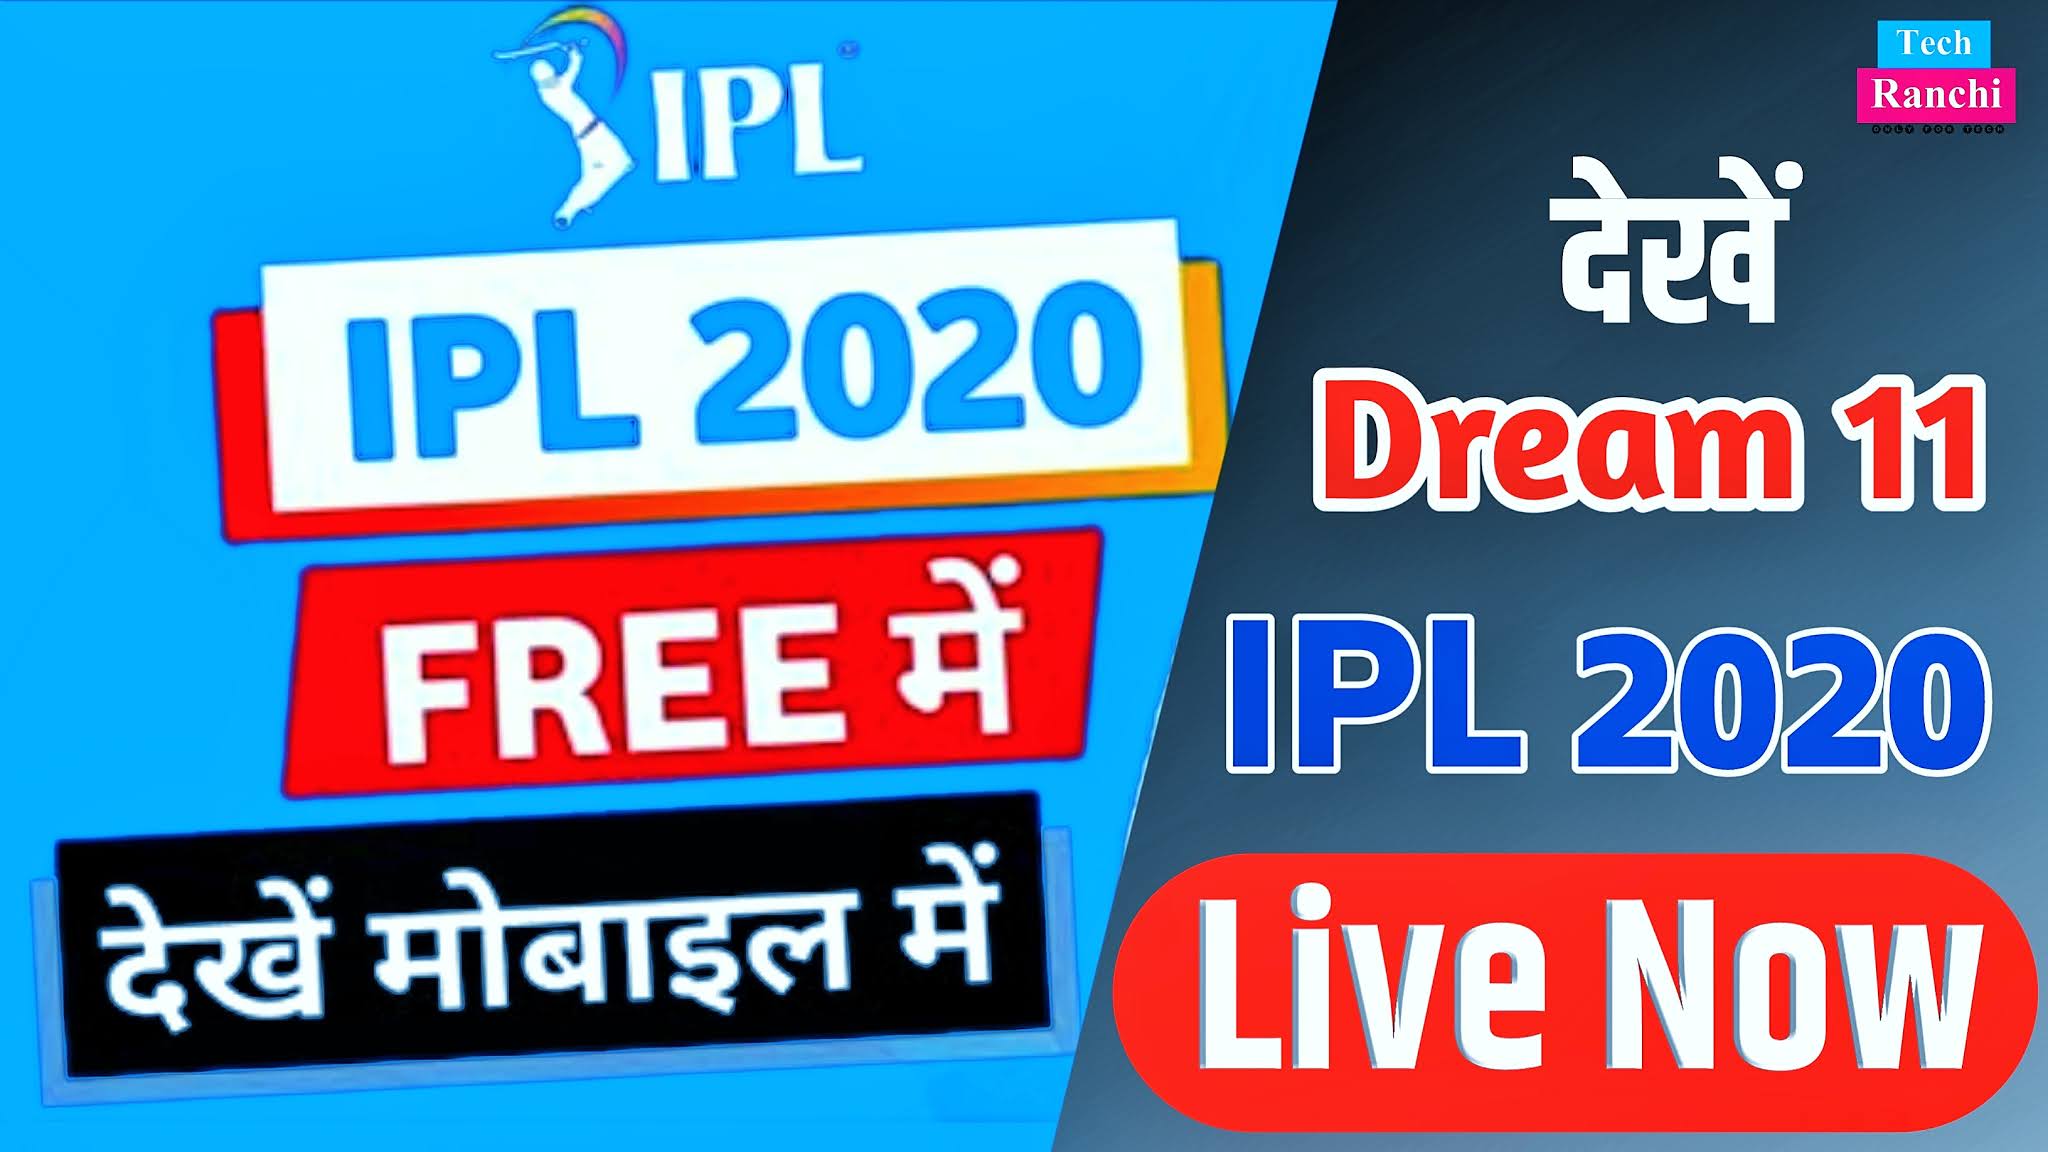 IPL, Dream11 IPL Live, IPL Free Streaming, Free IPL Match Streaming, Thop Tv, Oreo Tv, Disney+ Hotstar, PTV Sports, Live free IPL Match, Tech Ranchi,